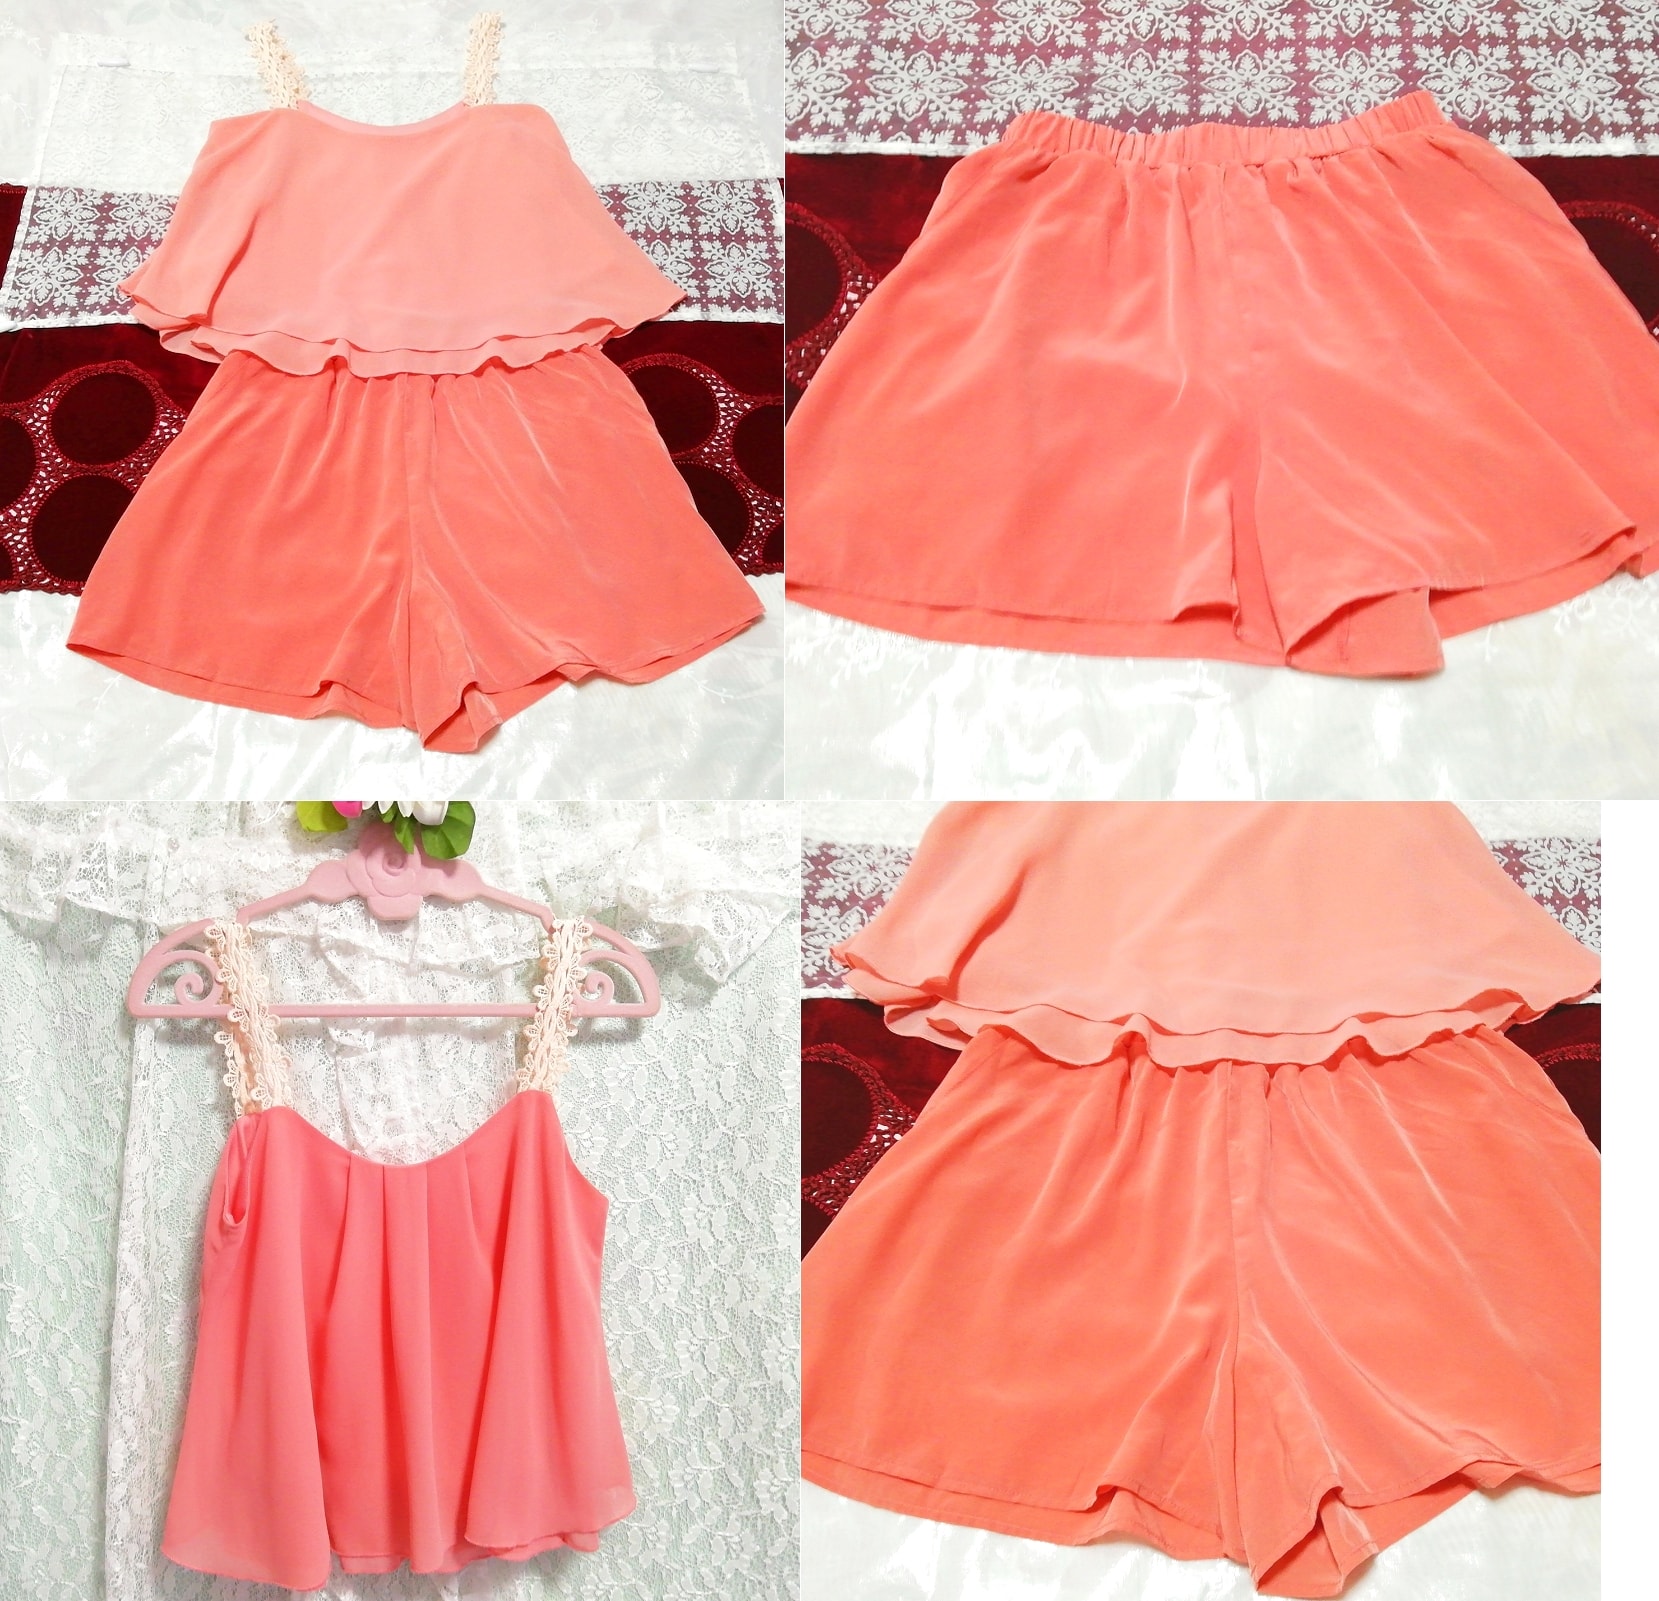 Pink chiffon camisole negligee nightgown nightwear shorts 2P, fashion, ladies' fashion, nightwear, pajamas